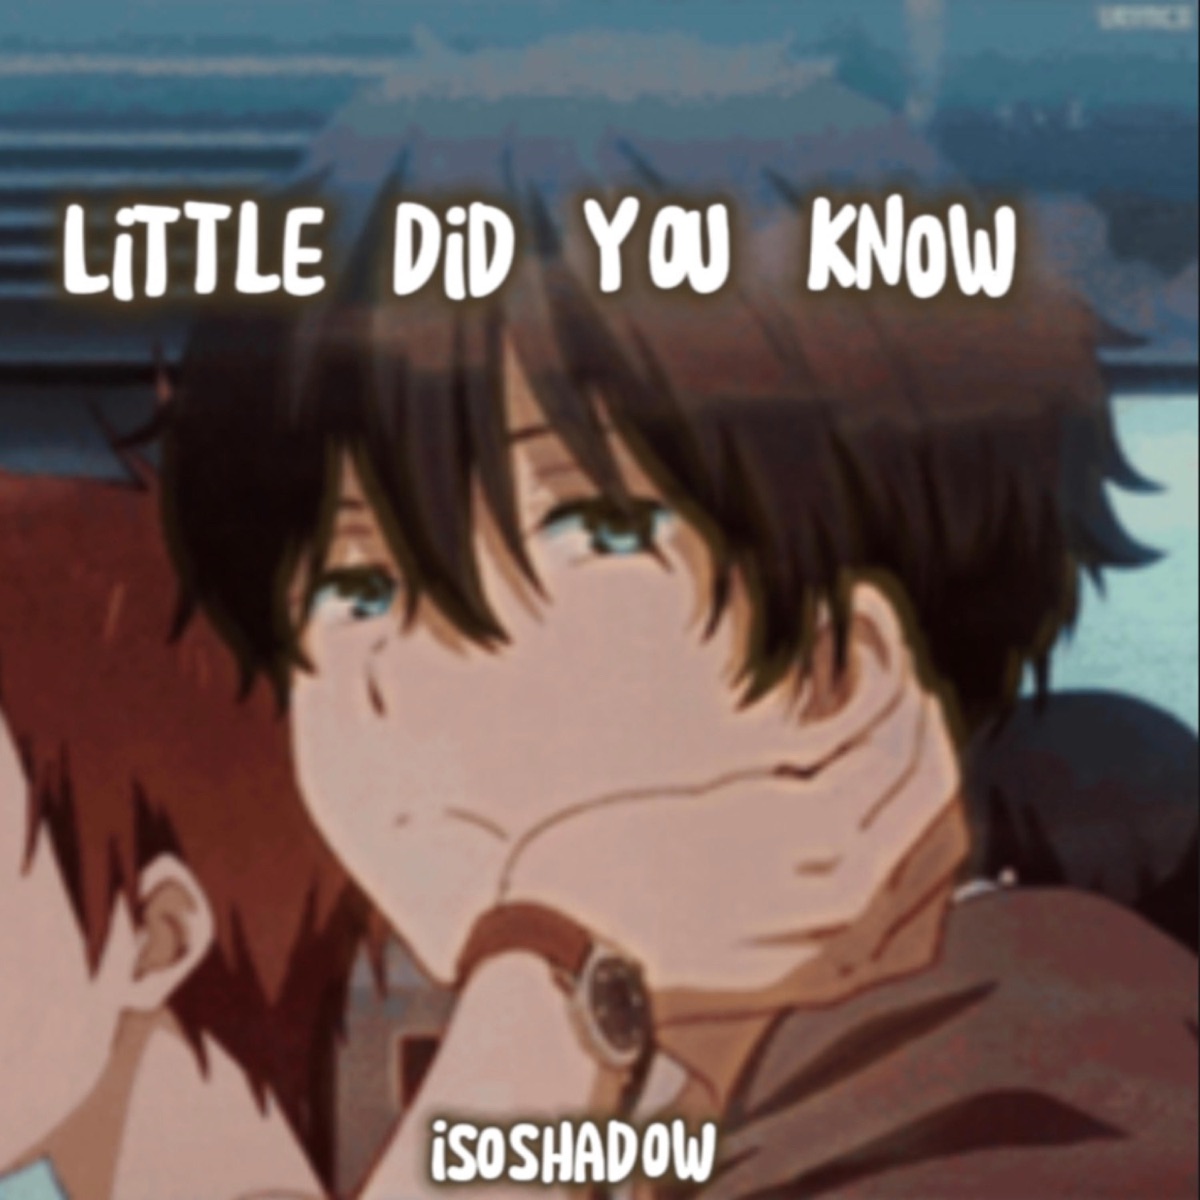 This Lazy Lessie | Anime / Manga | Know Your Meme